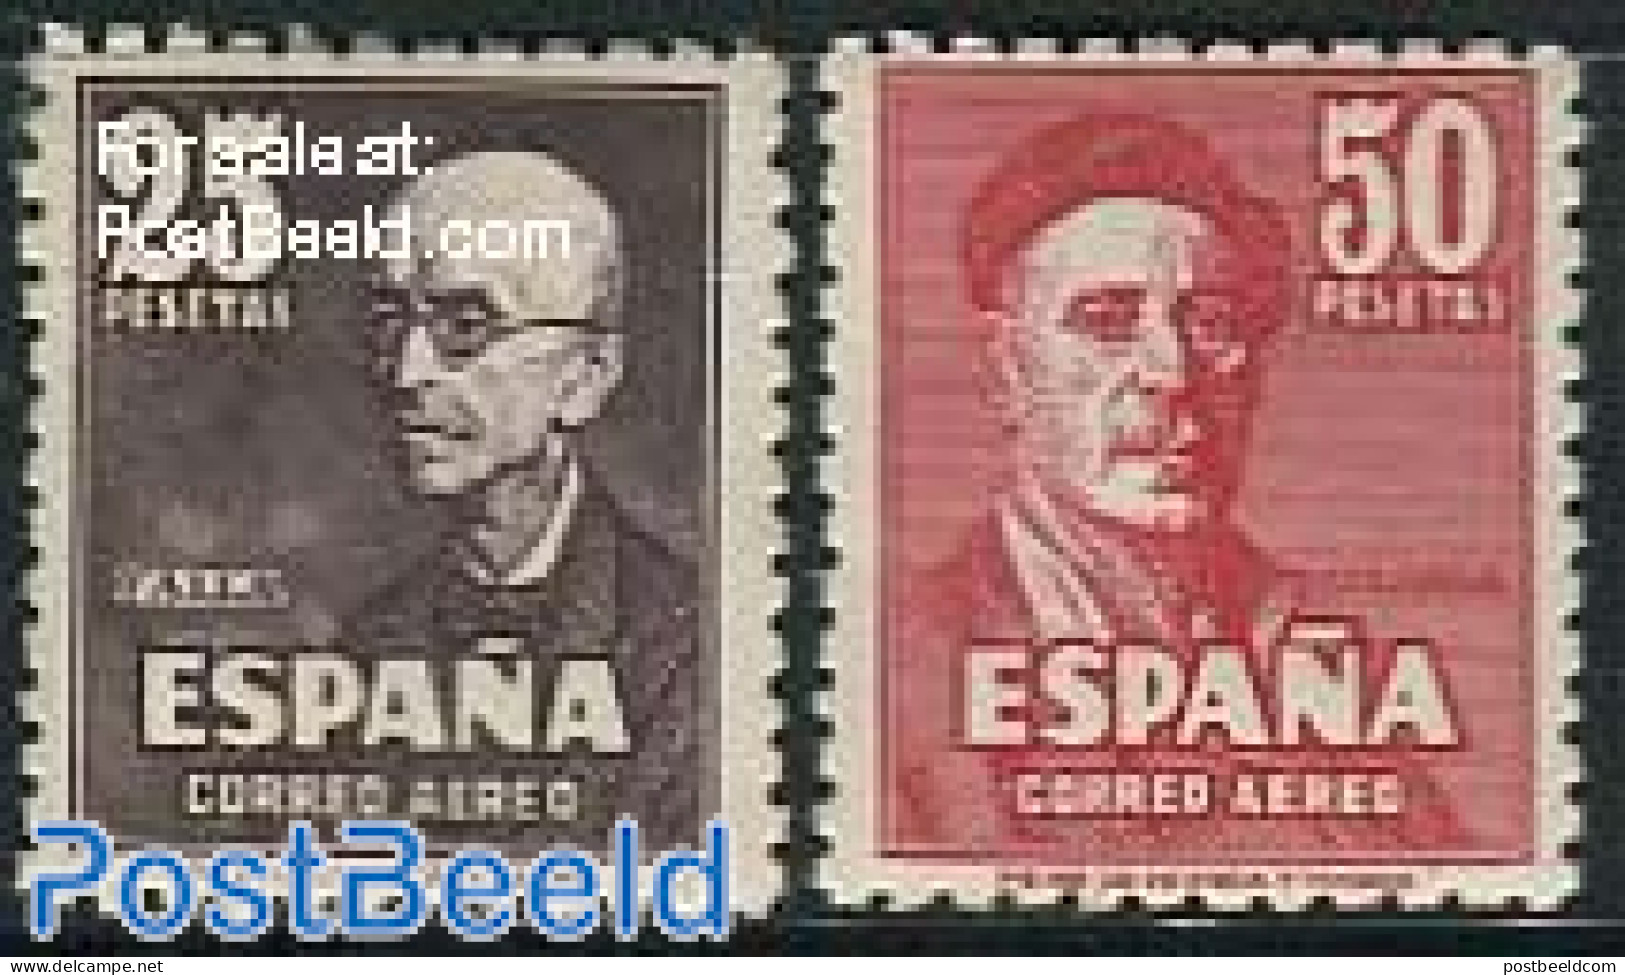 Spain 1947 M. De Falla, I. De Zulogua 2v, Unused (hinged), Performance Art - Music - Art - Self Portraits - Unused Stamps